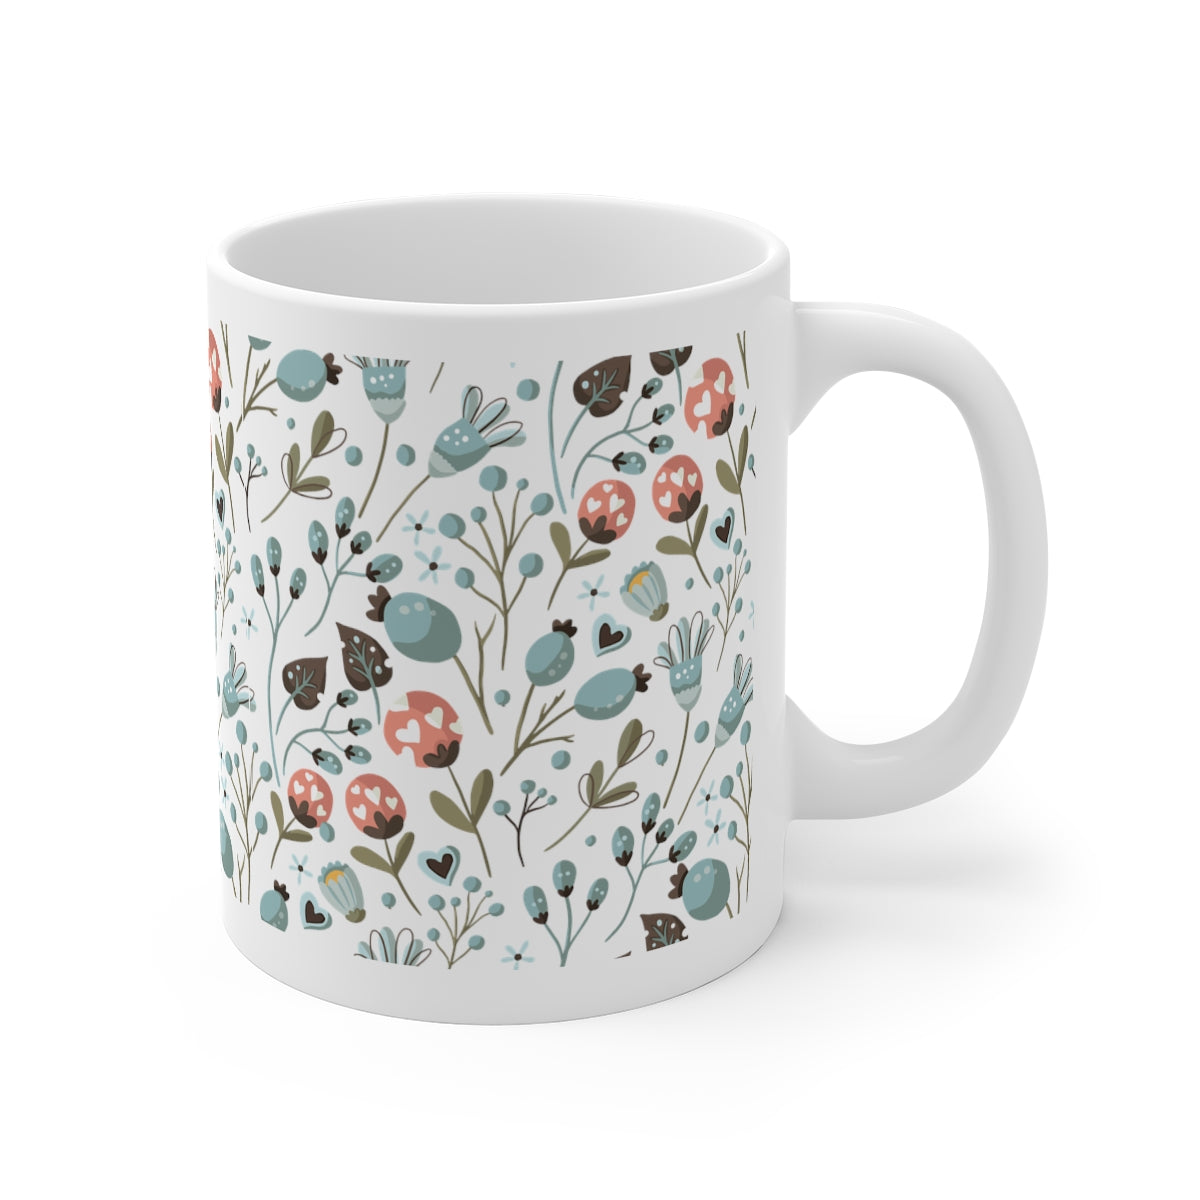 Colorful Floral Printed on White Coffee Mug